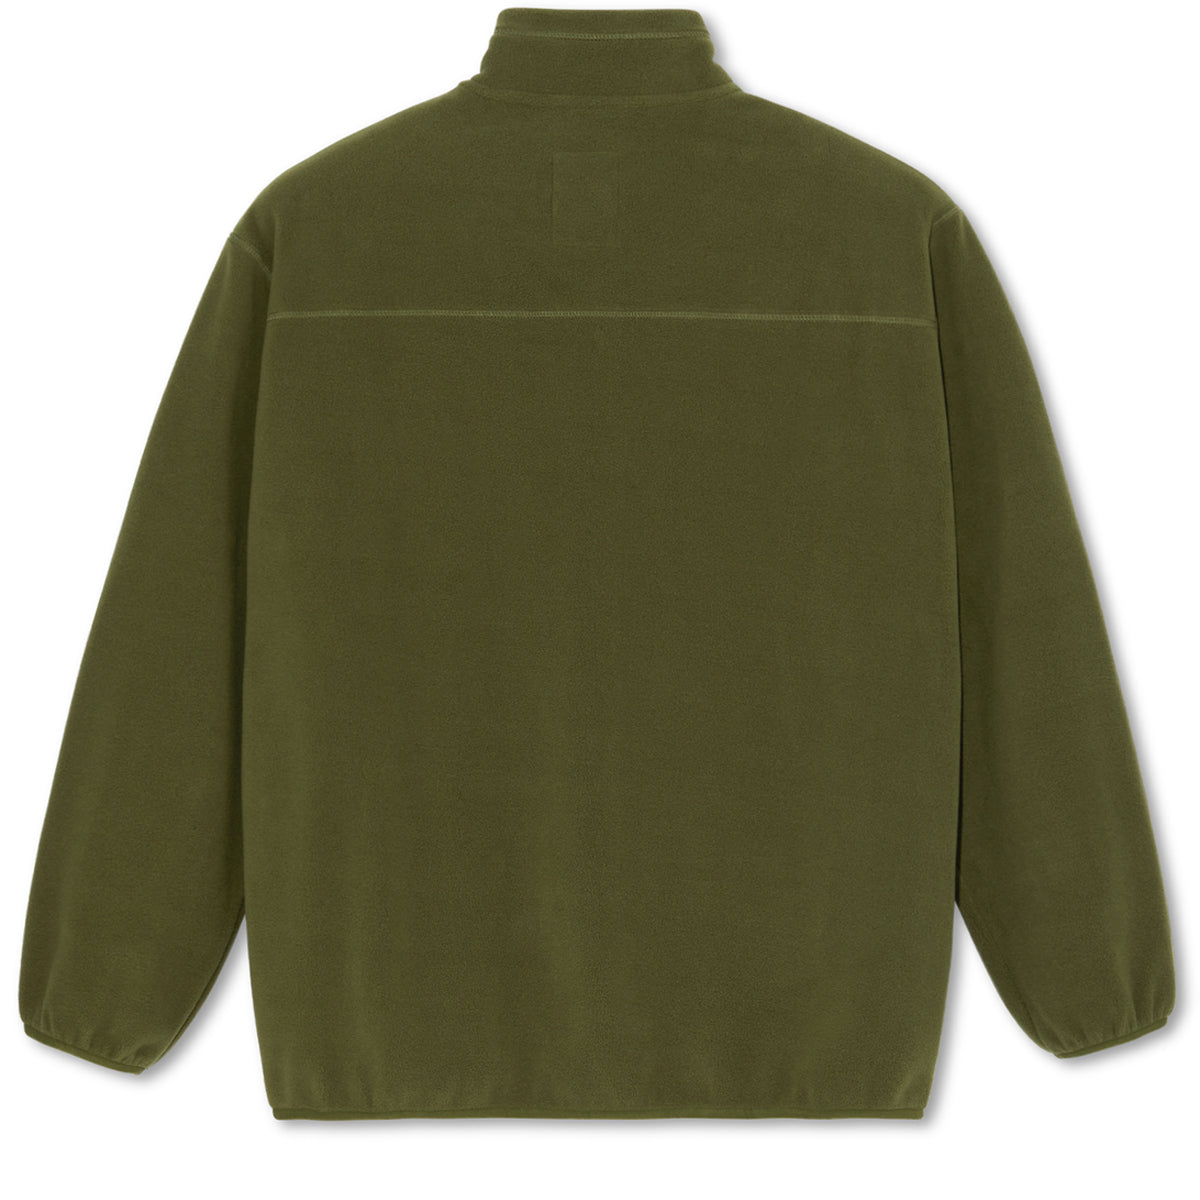 Polar Basic Fleece Jacket - Army Green image 2